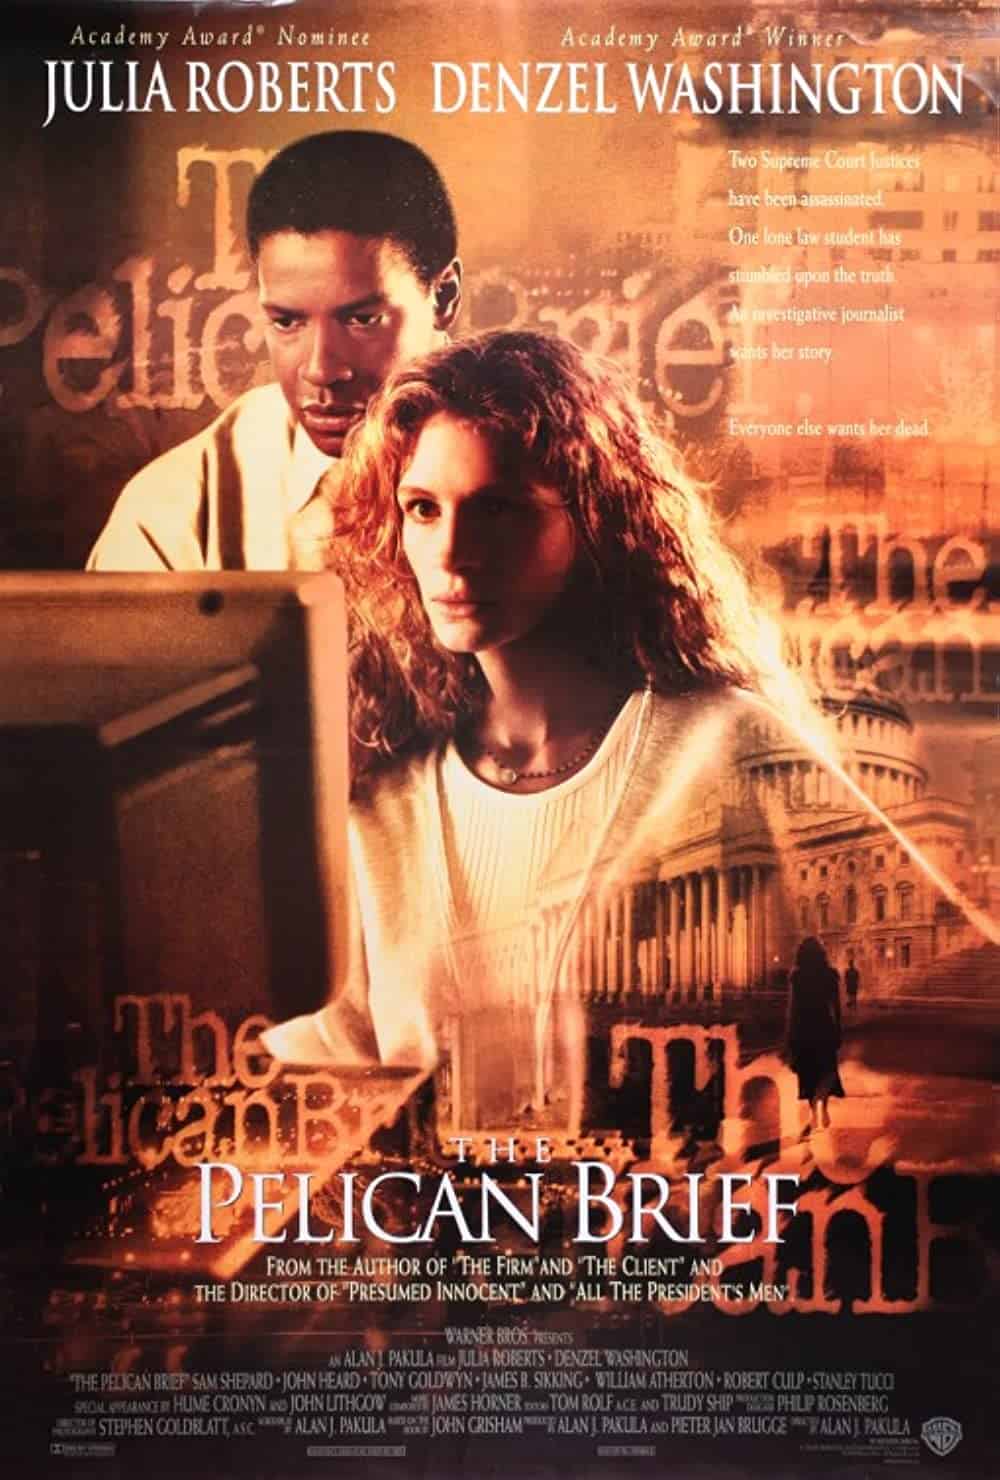 The Pelican Brief (1993) Best Julia Roberts Movies (Ranked)